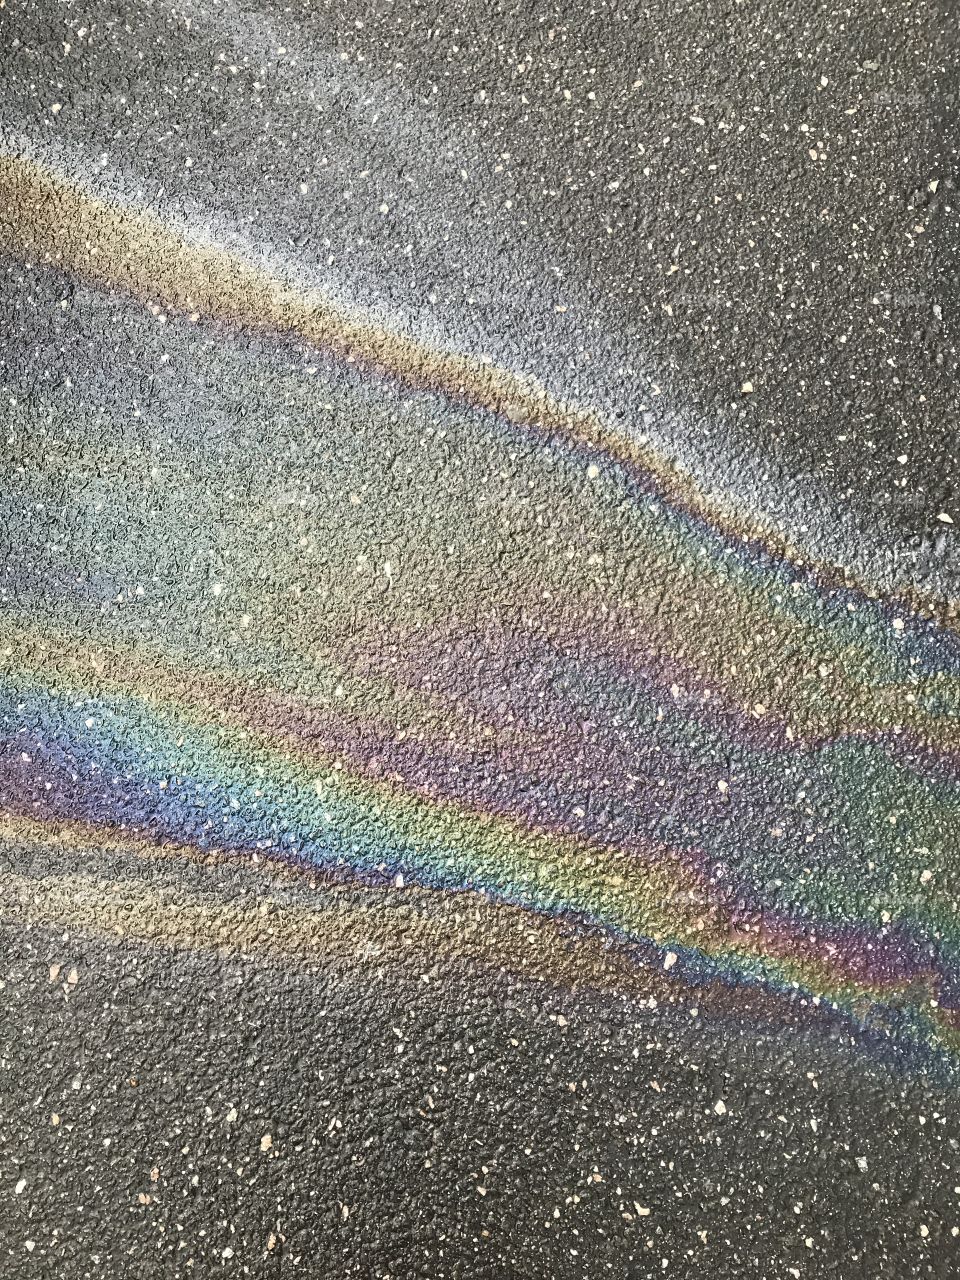 Oil spill on pavement